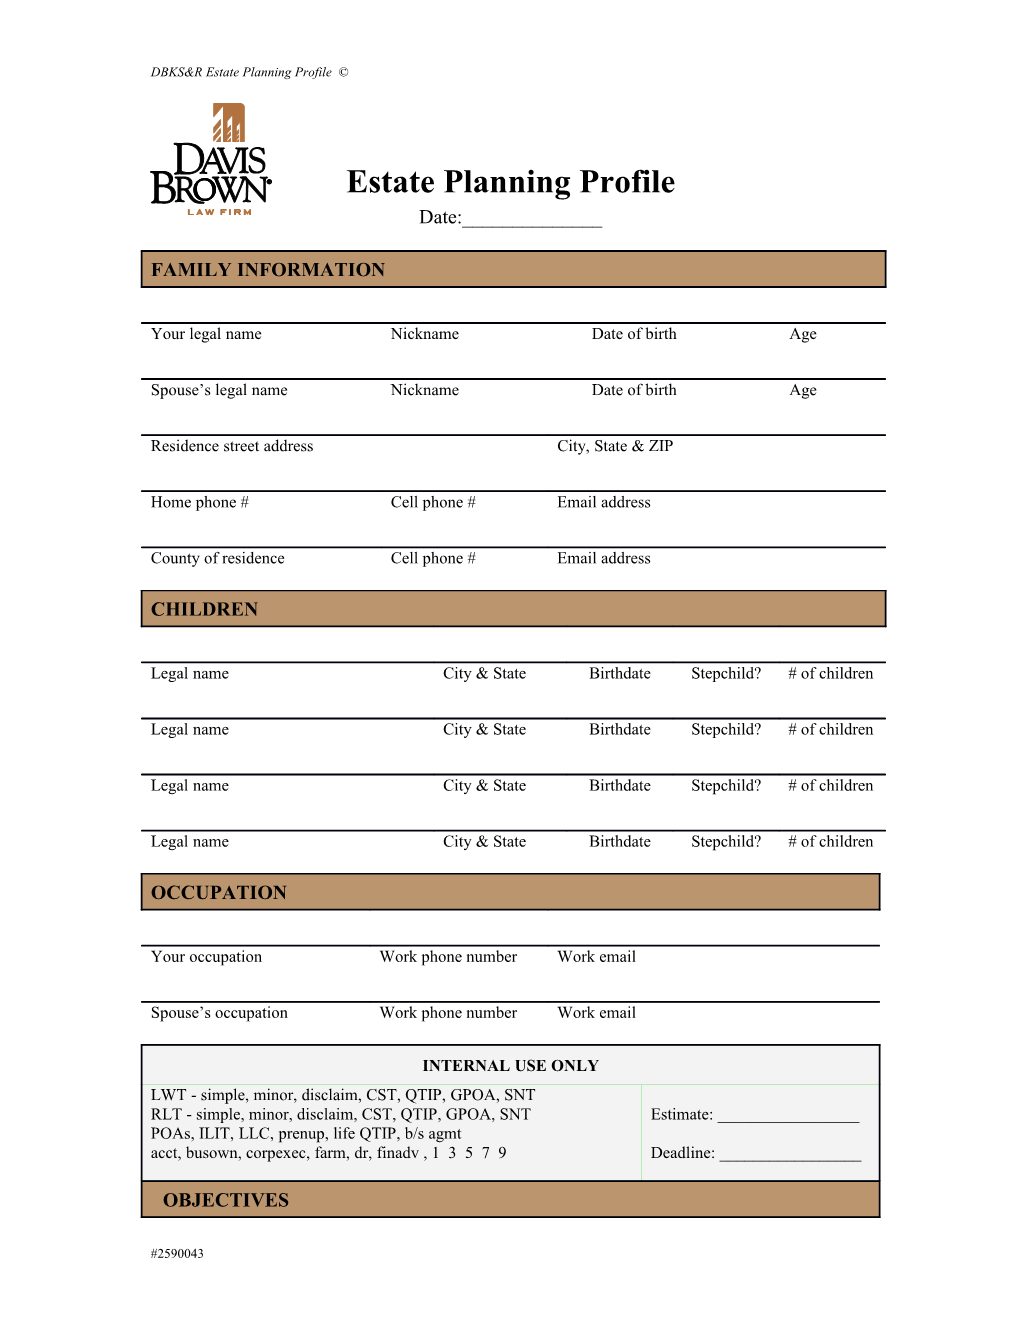 DBKS&R Estate Planning Profile Page 1 of 3